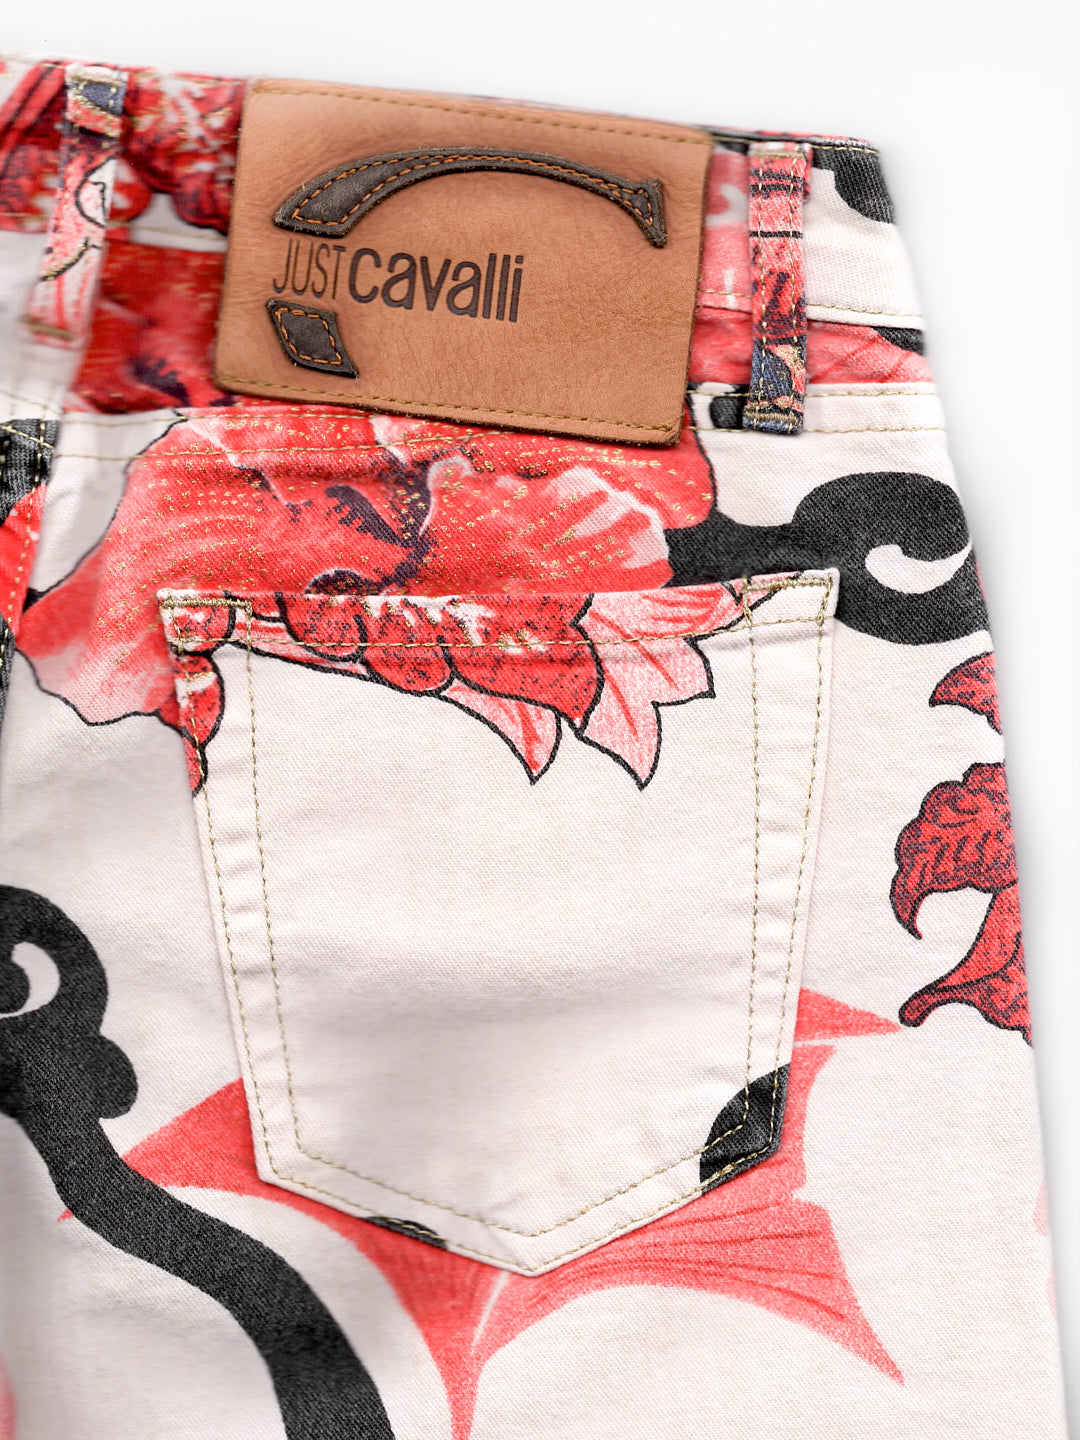 Cavalli Cherry Blossom Set